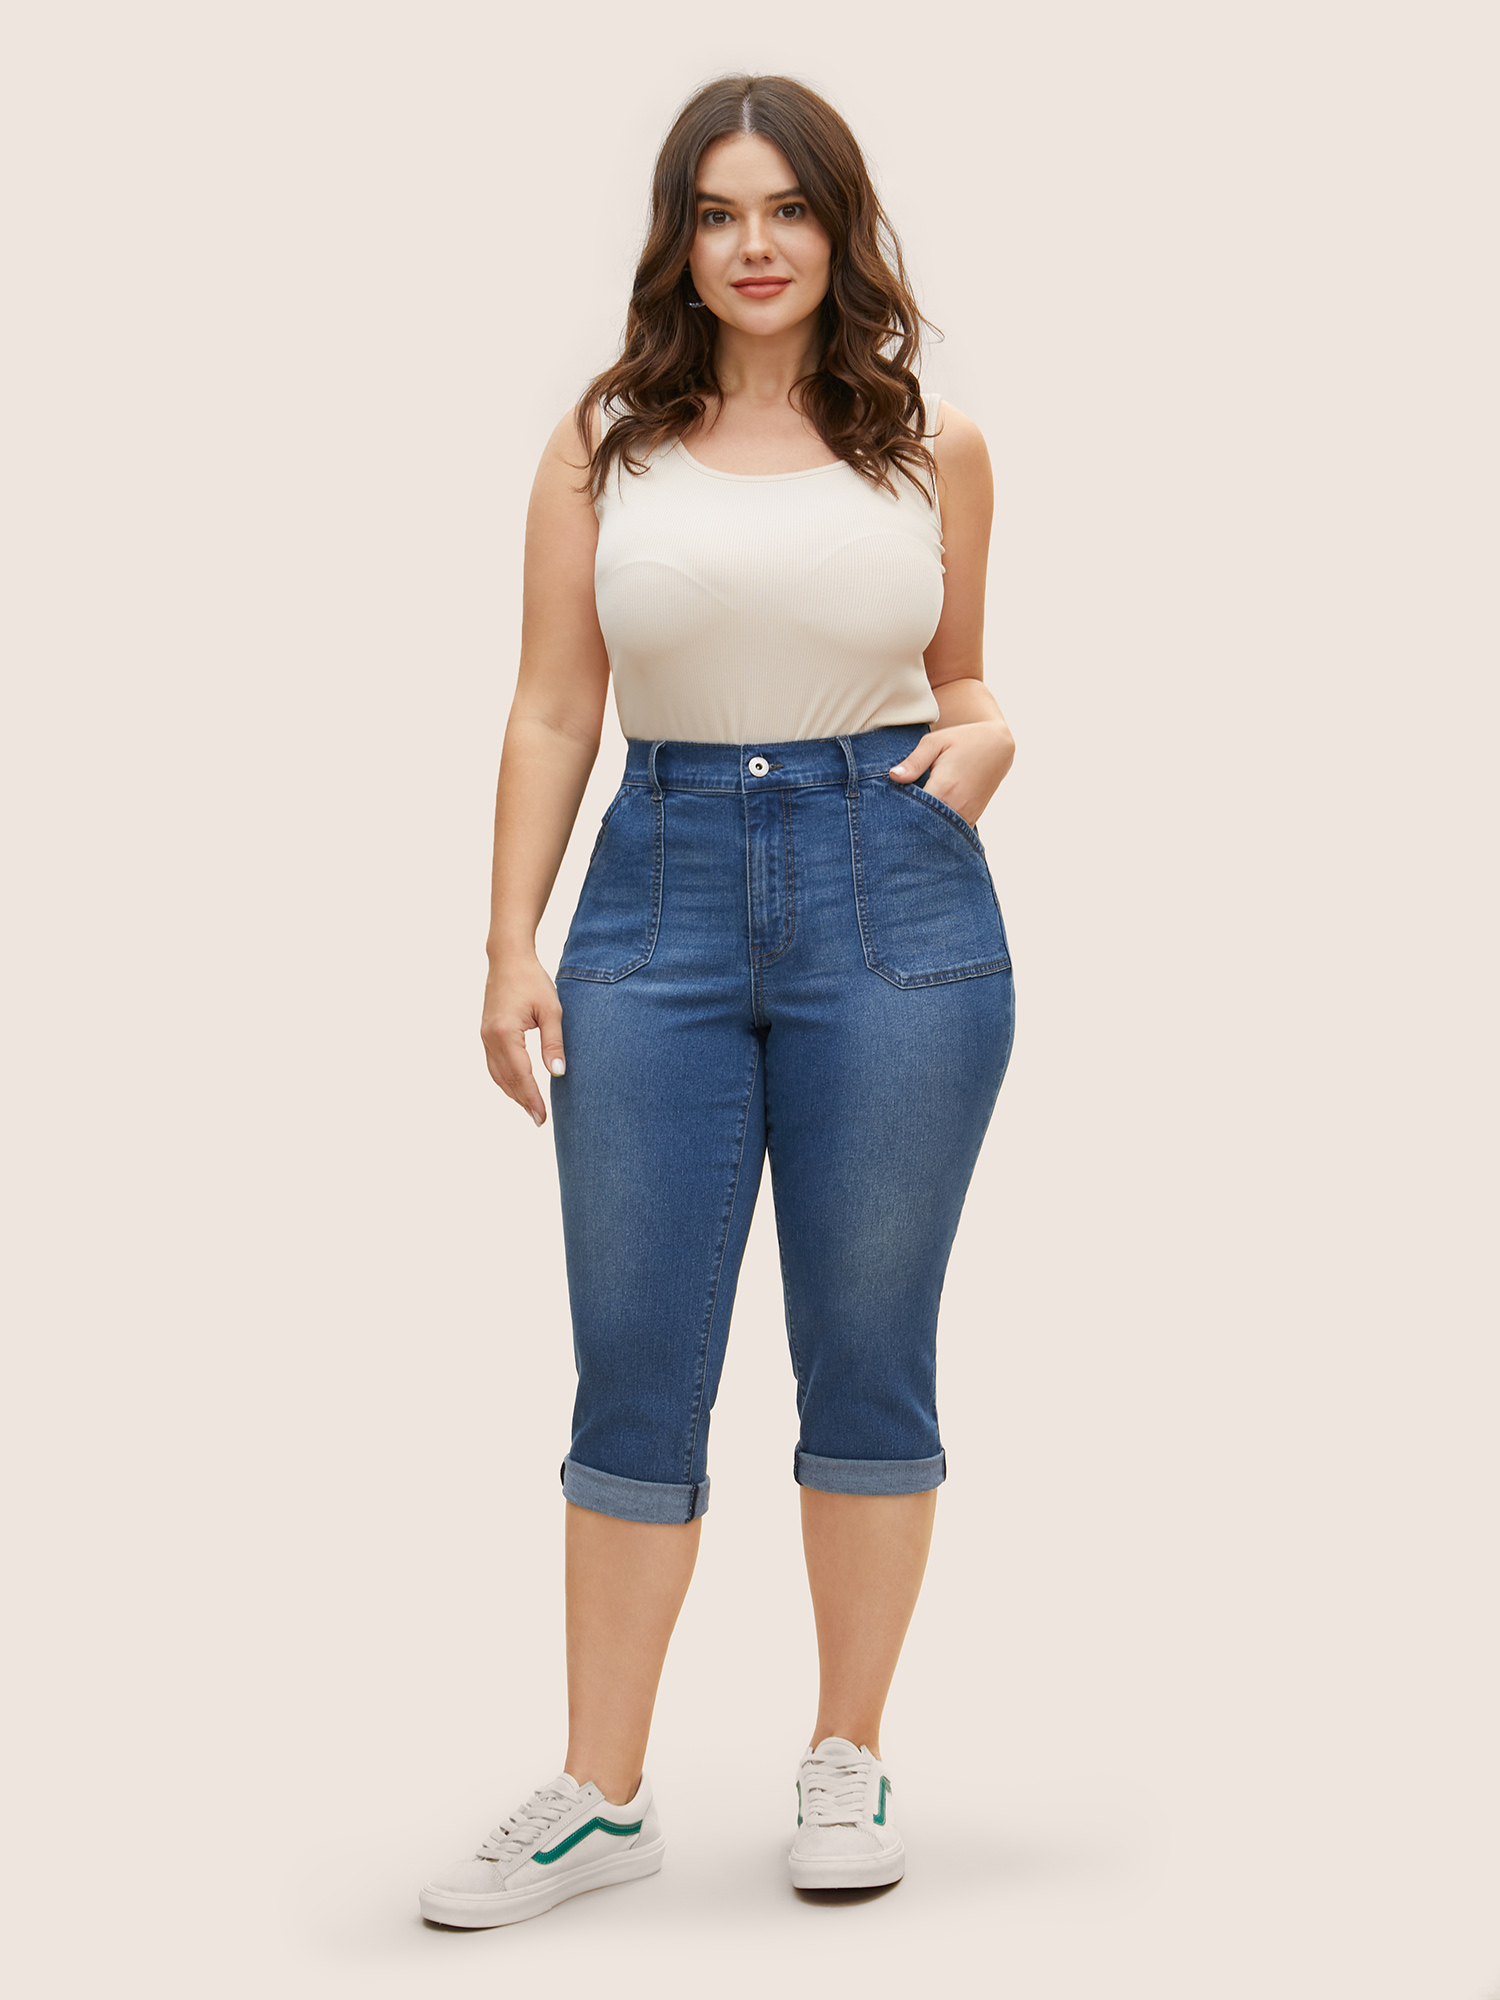 

Plus Size Medium Wash Roll Hem Pull On Jegging Jeans Women Denimblue Casual Roll Hem Medium stretch Slanted pocket Jeans BloomChic